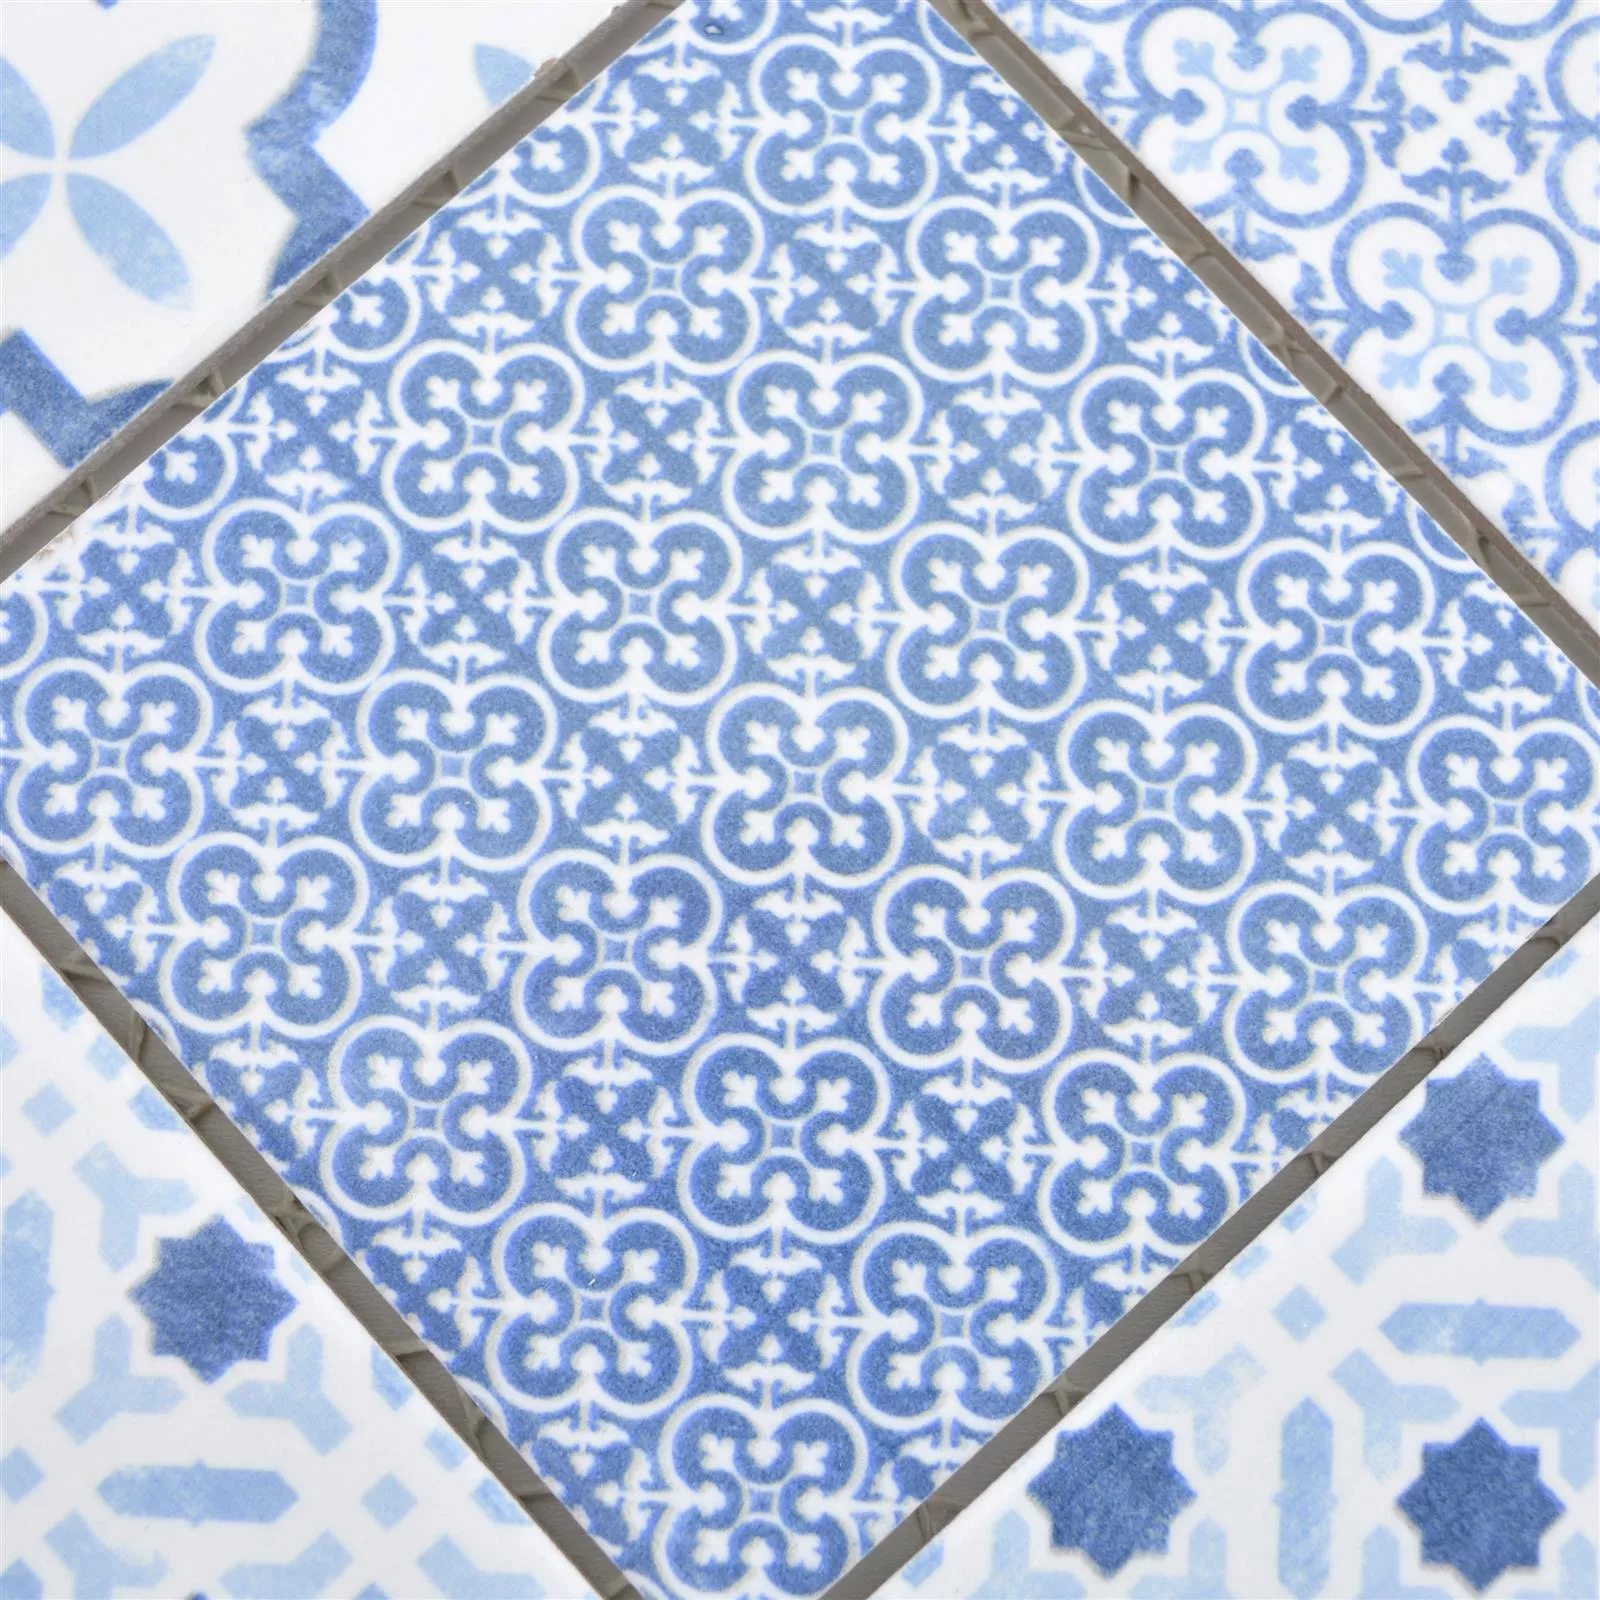 Muestra Cerámica Azulejos De Mosaico Romantica Retro Blue